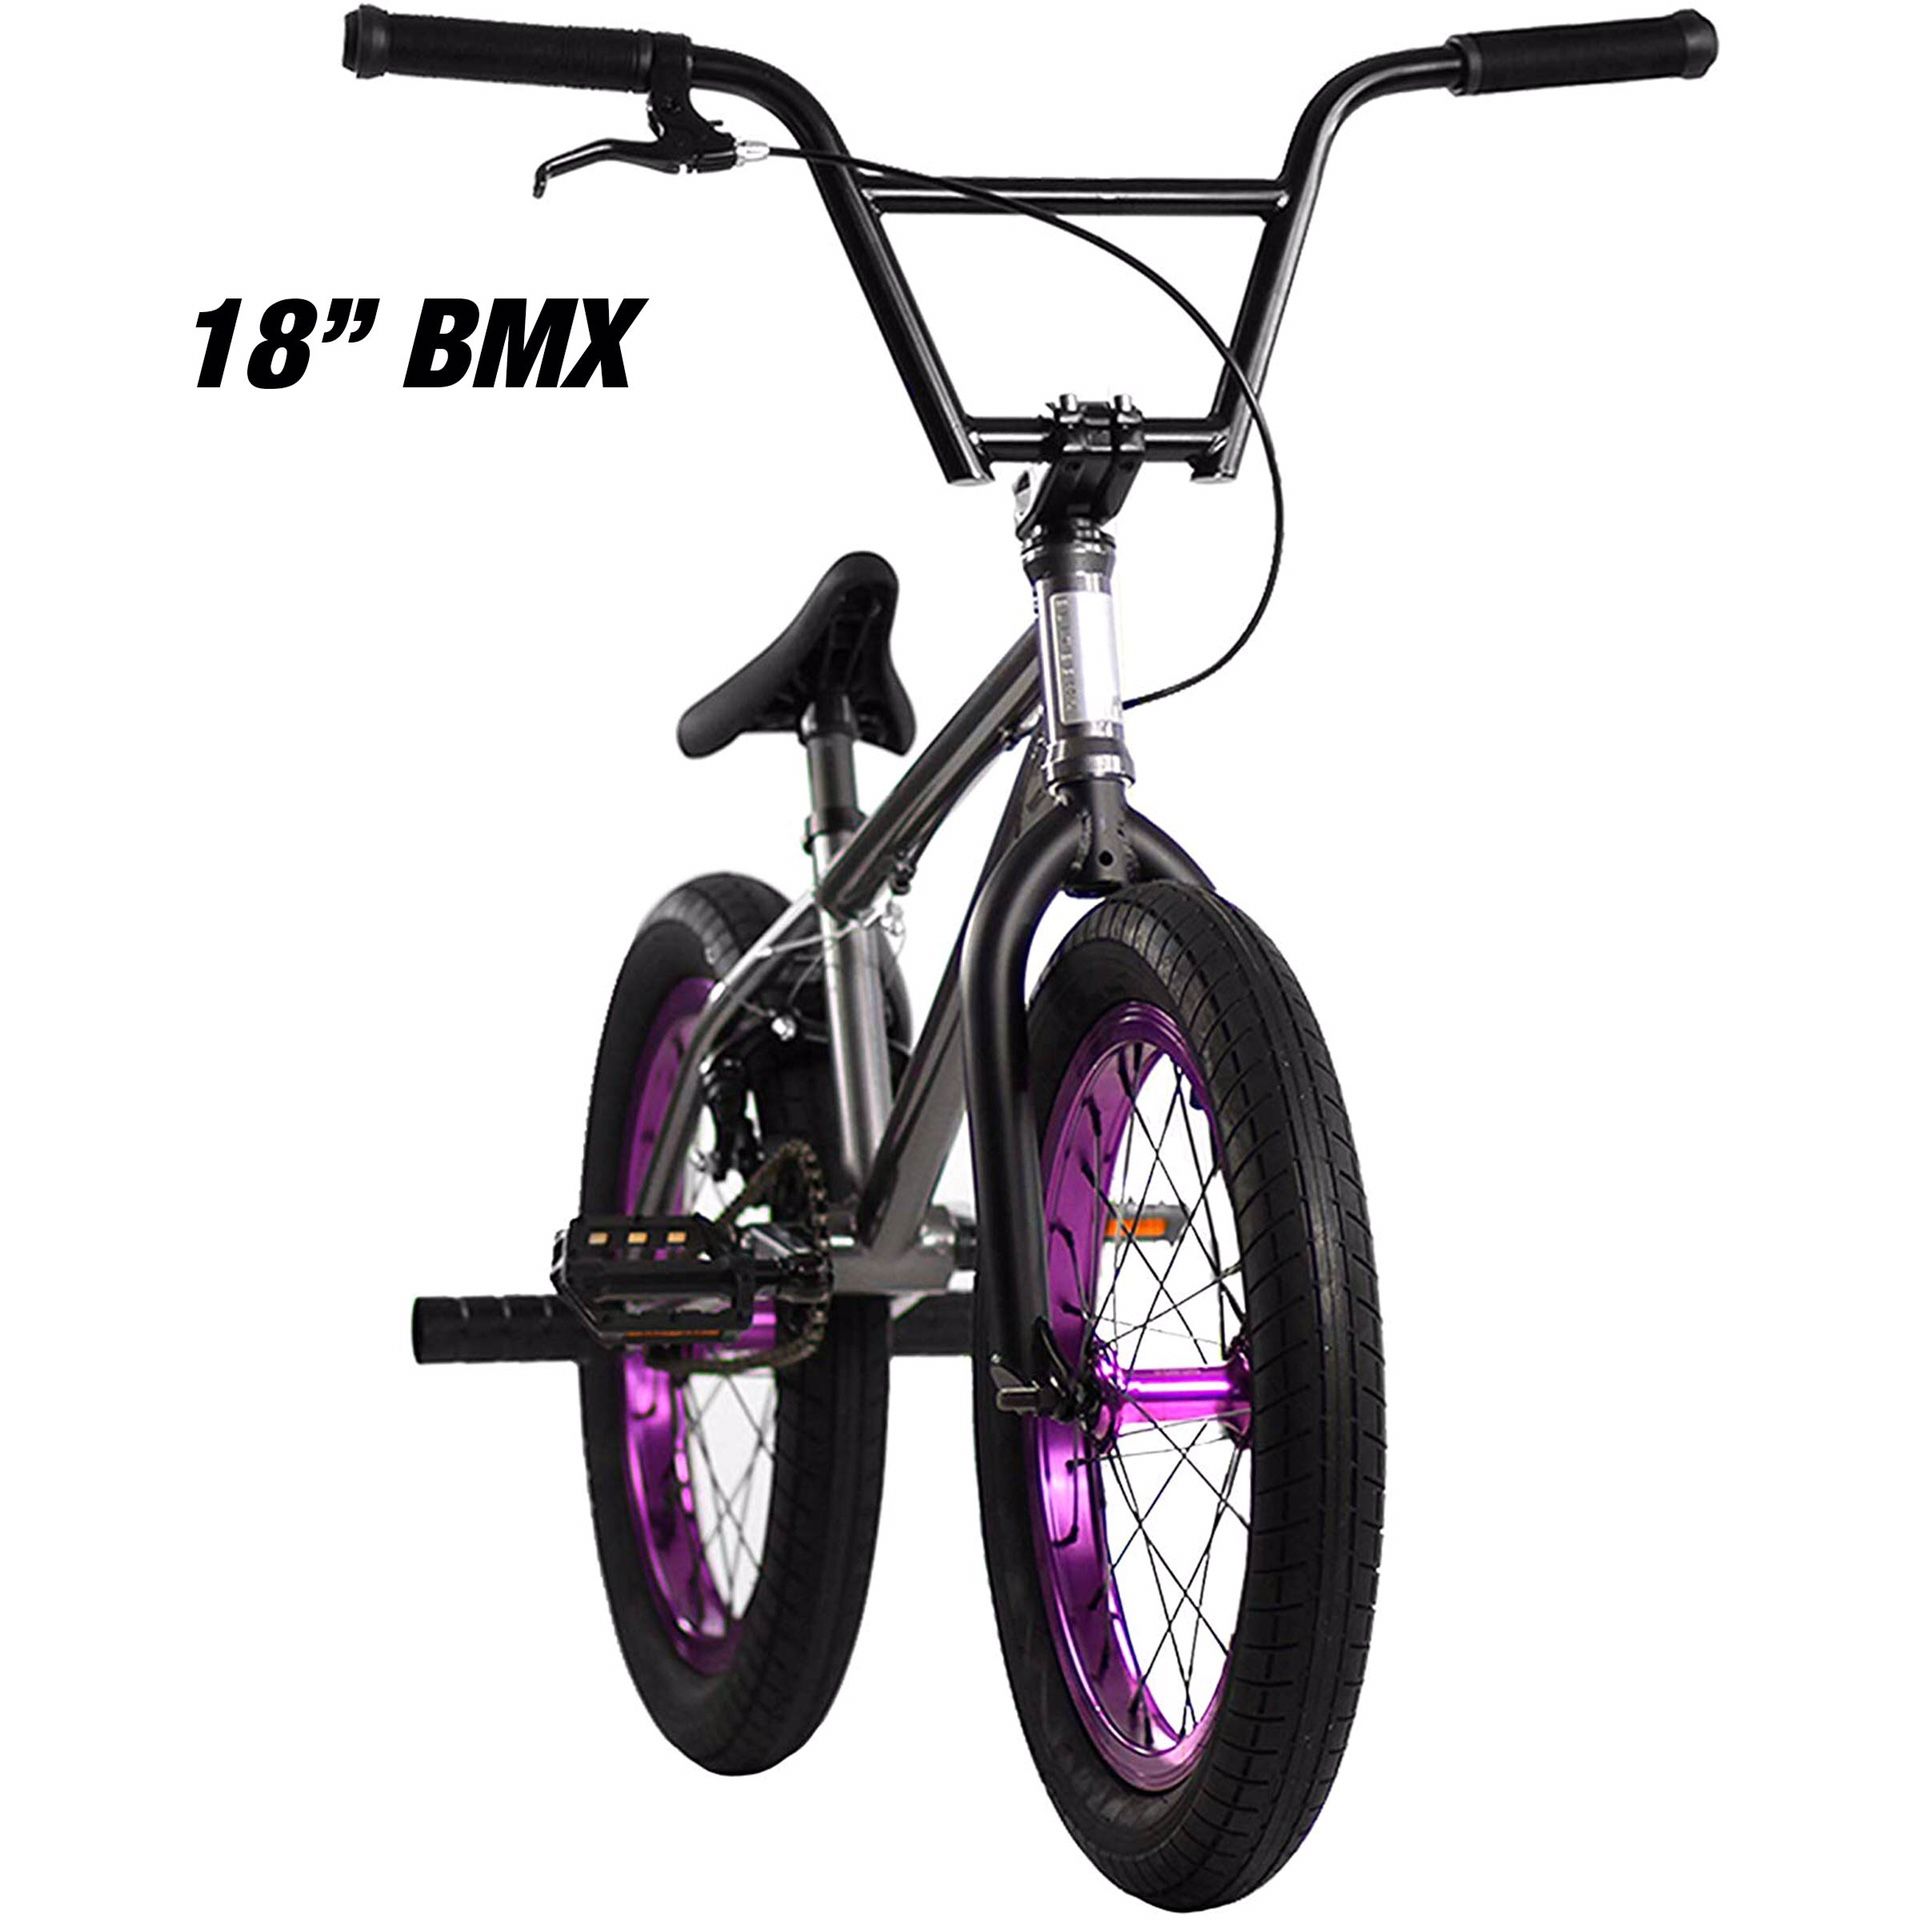 Elite 18” BMX bike